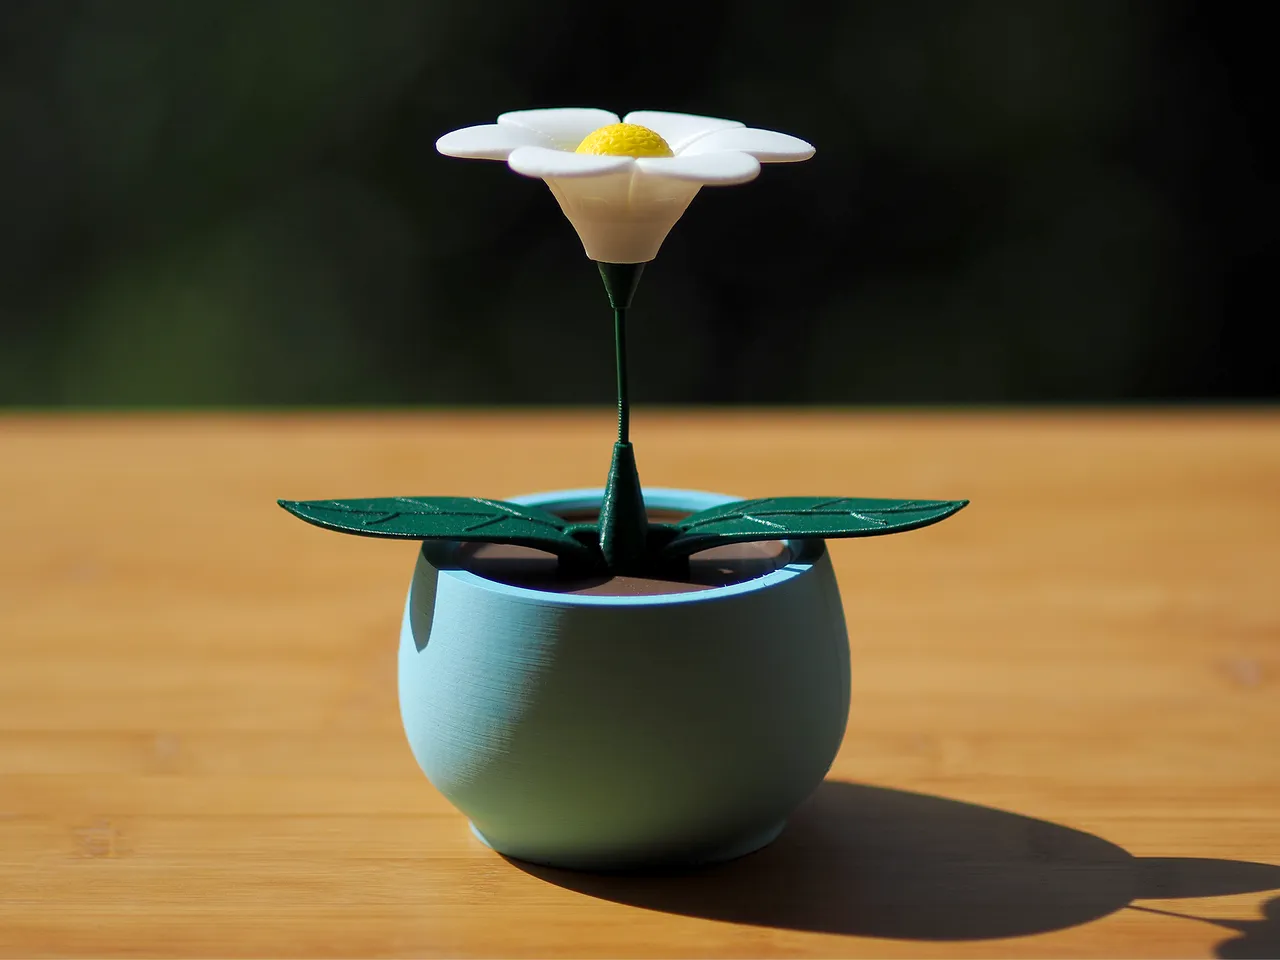 flower pot printable